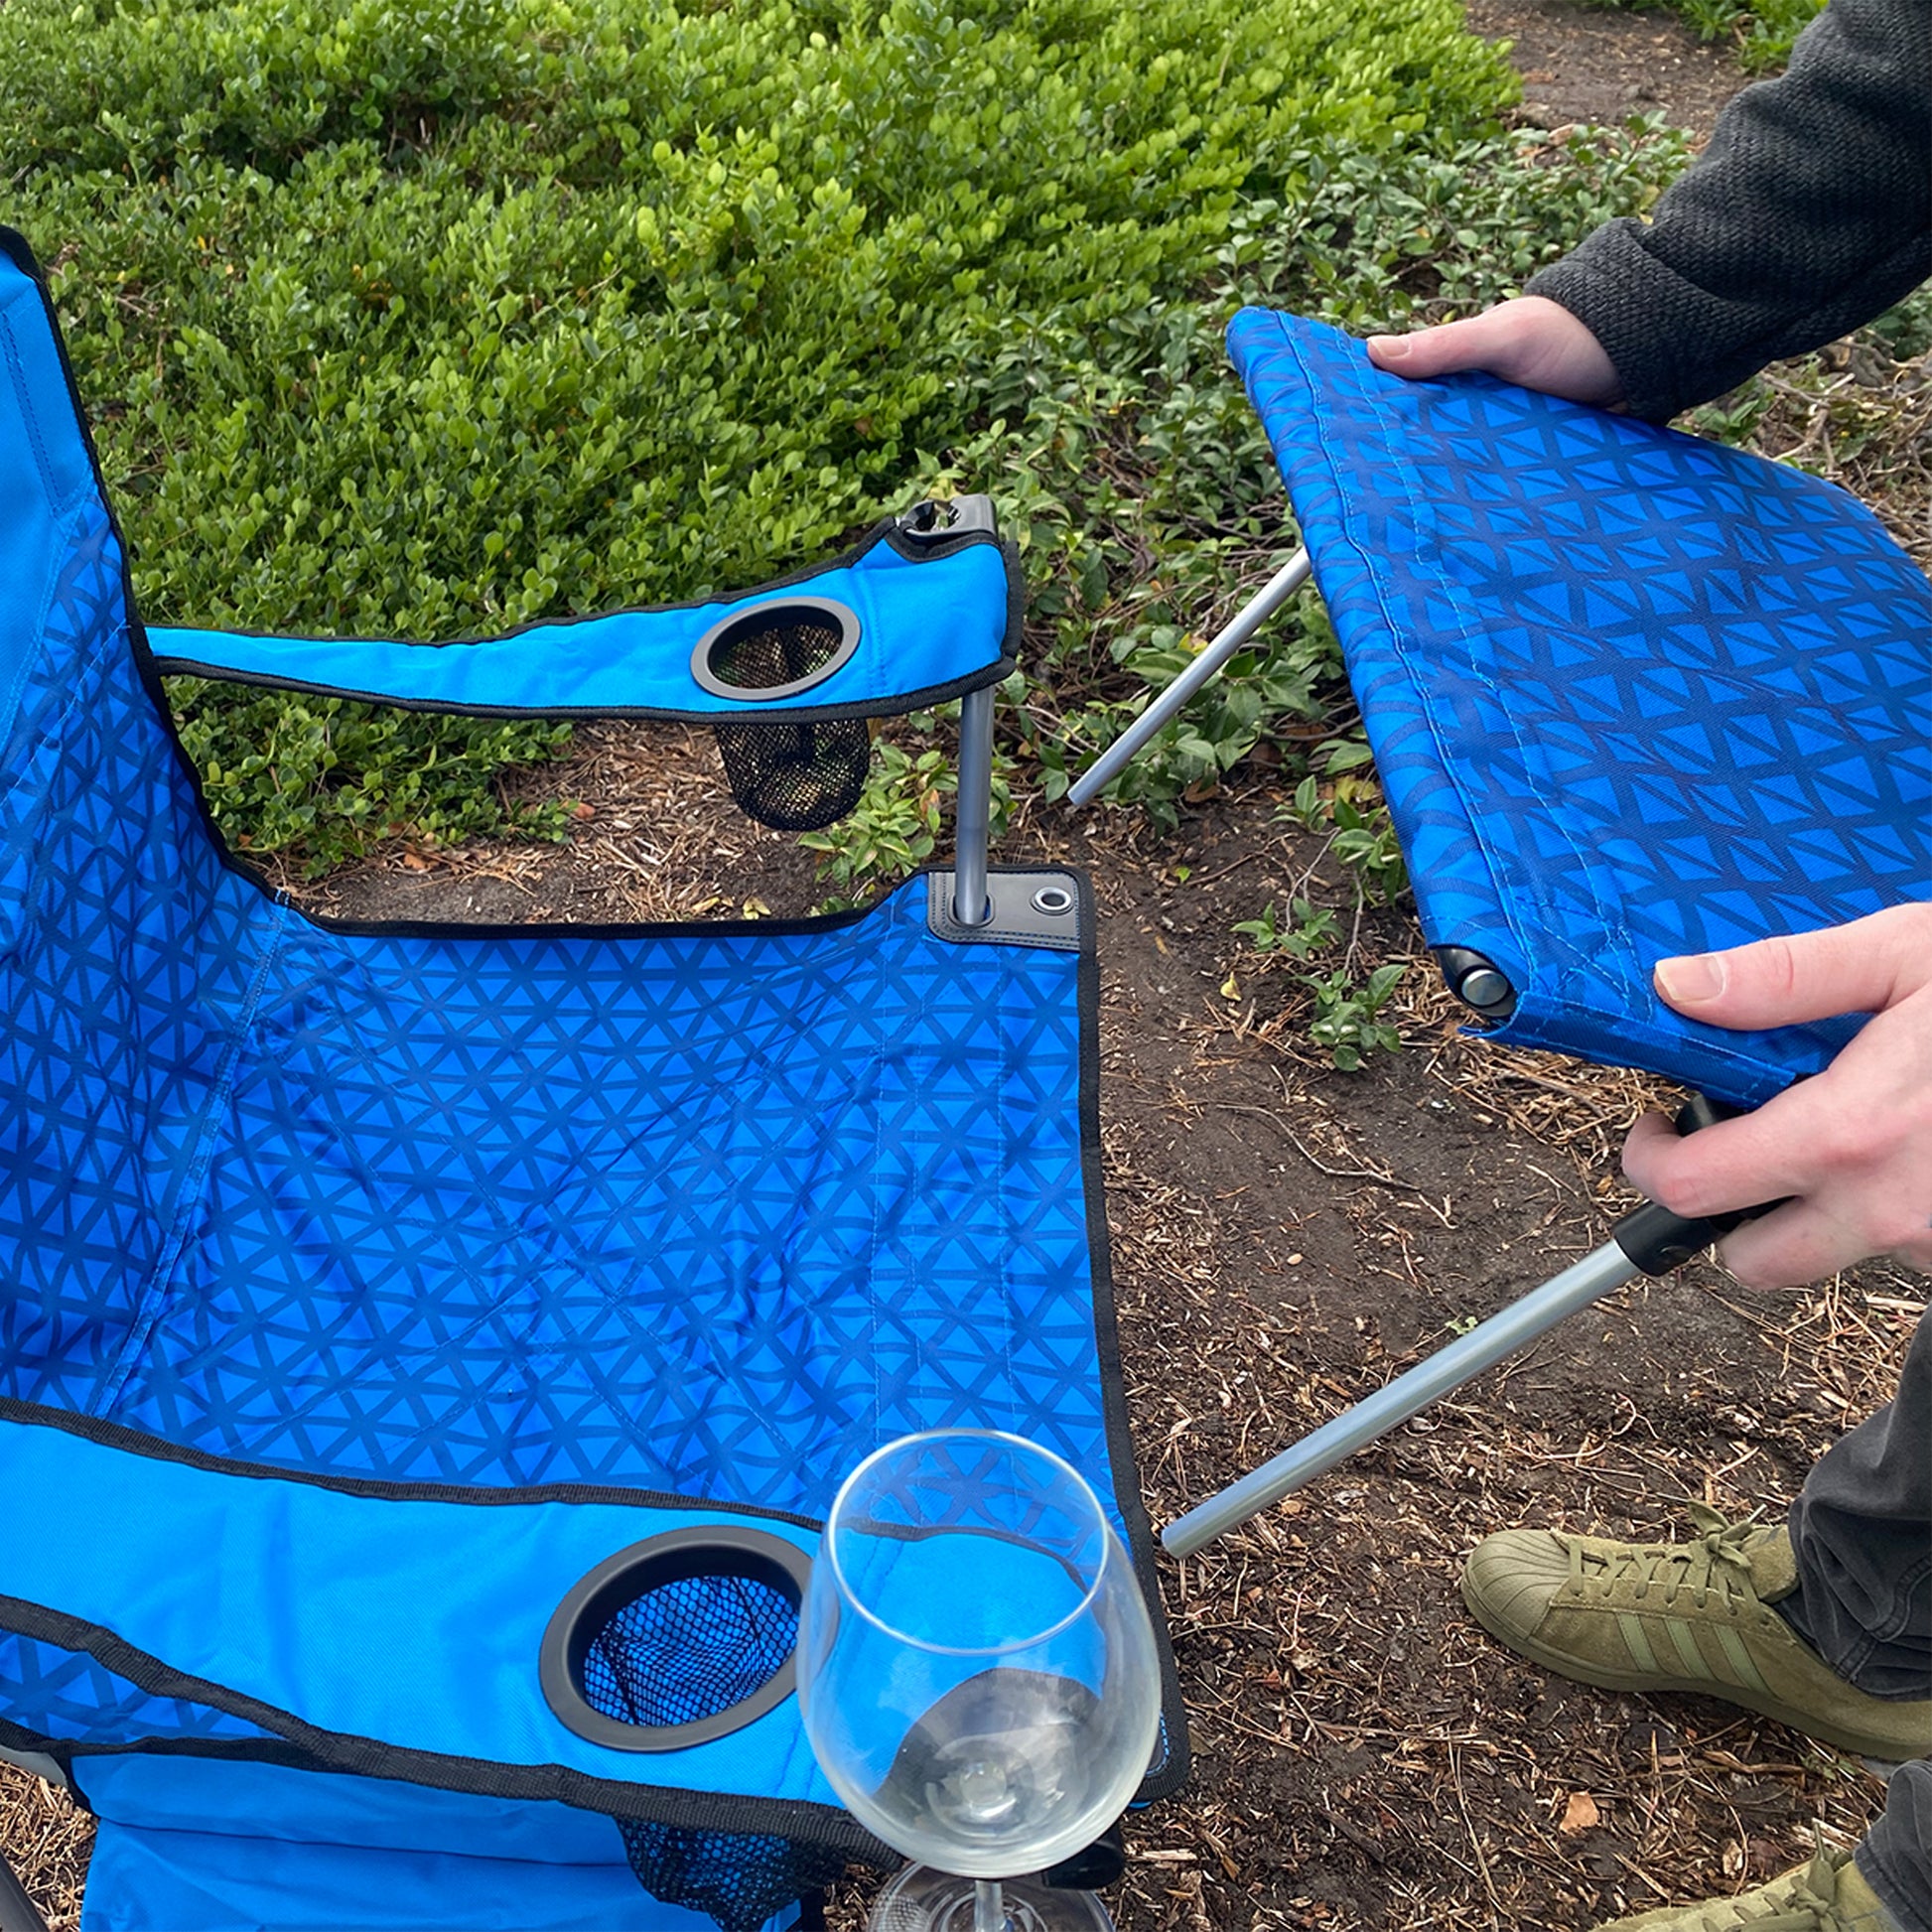 iChair Folding Wine Chair with Adjustable Table | Ocean Diamond - Creative Wagons